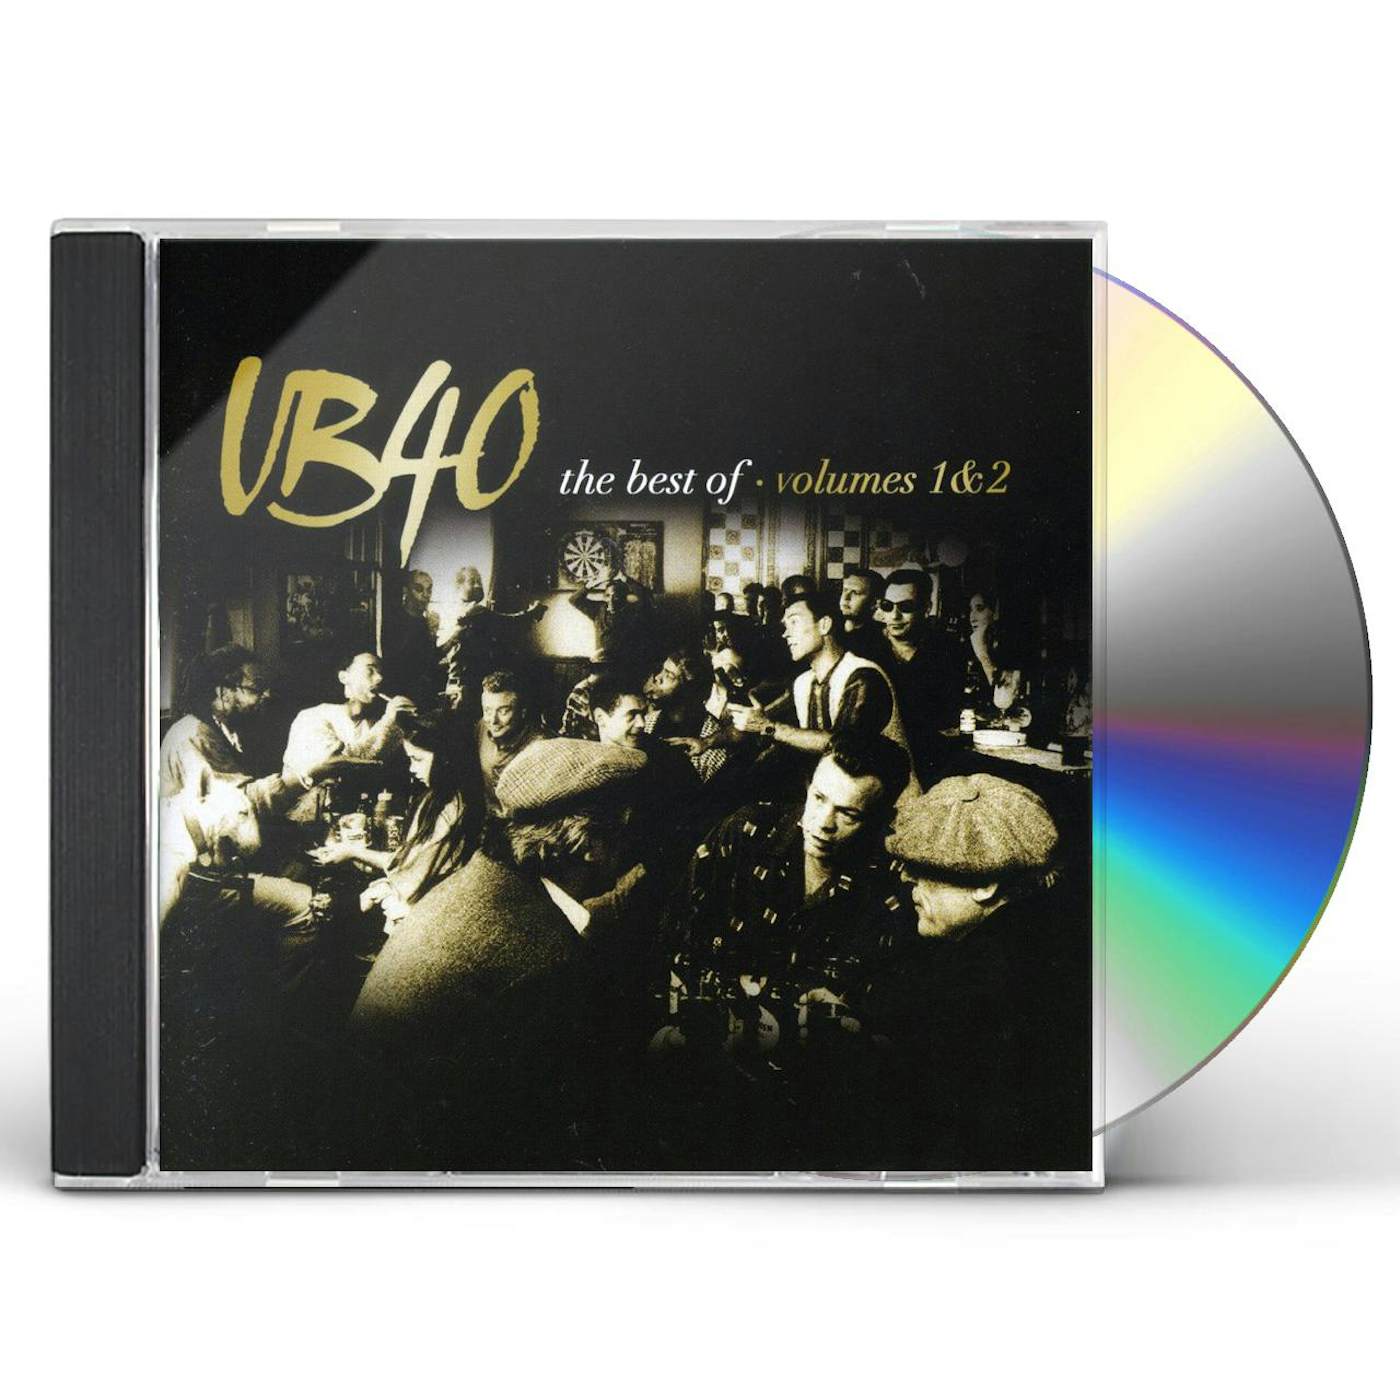 UB40 BEST OF 1 & 2 CD